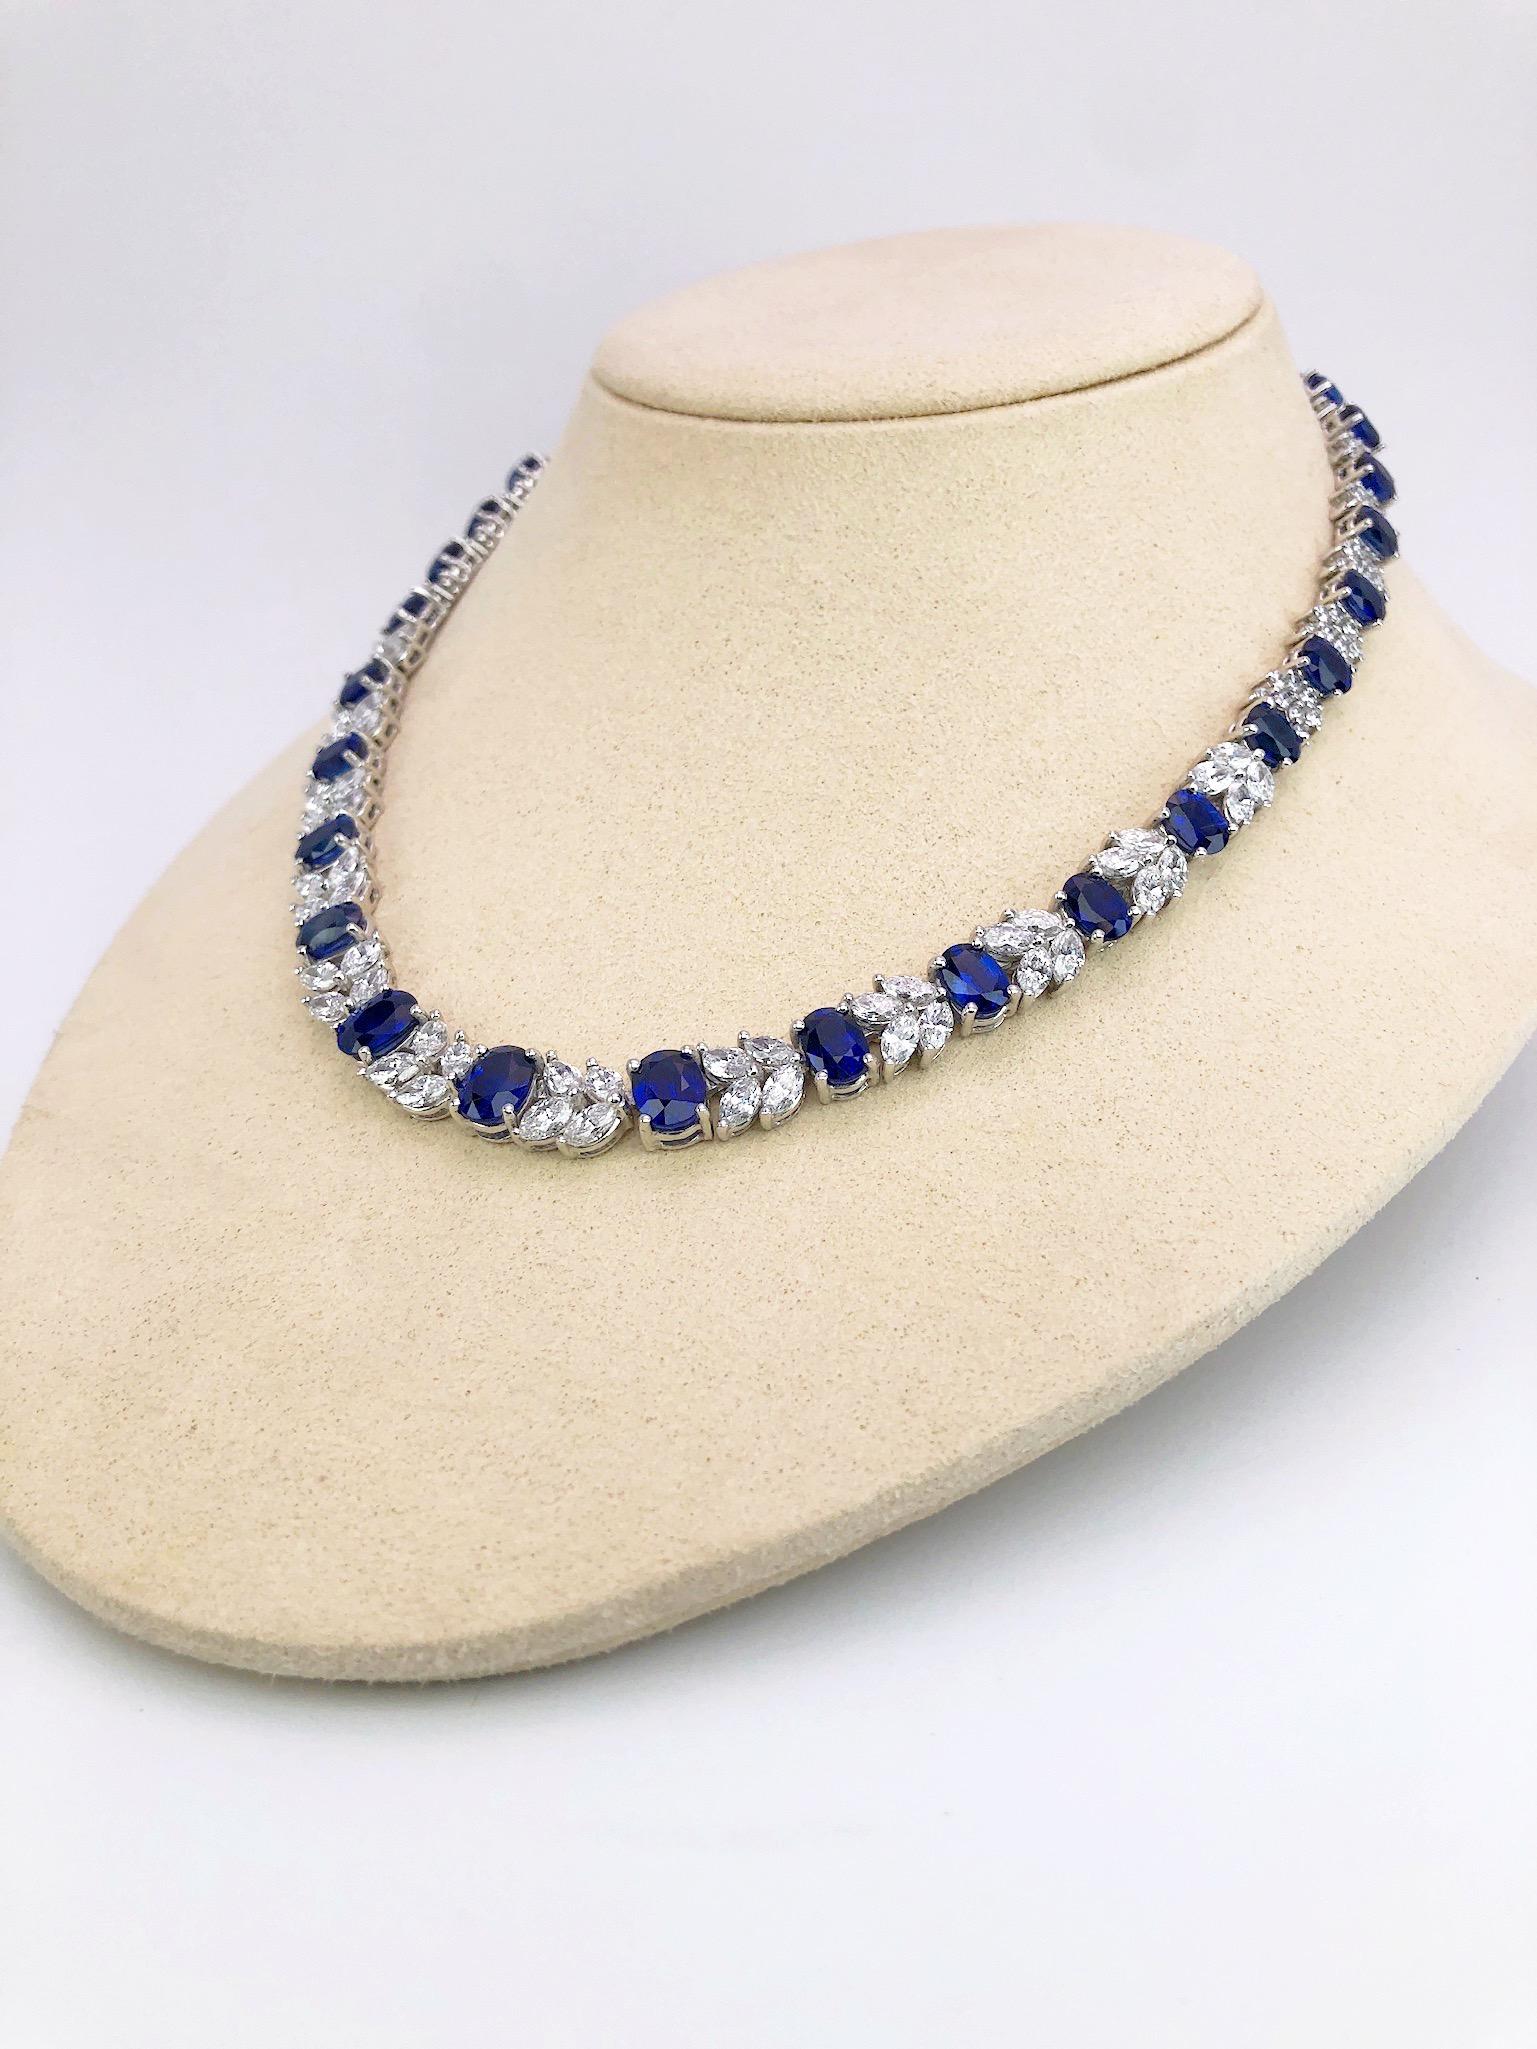 Contemporary Platinum Necklace 33.70 Carat Oval Blue Sapphires and 13.22 Carat Diamonds